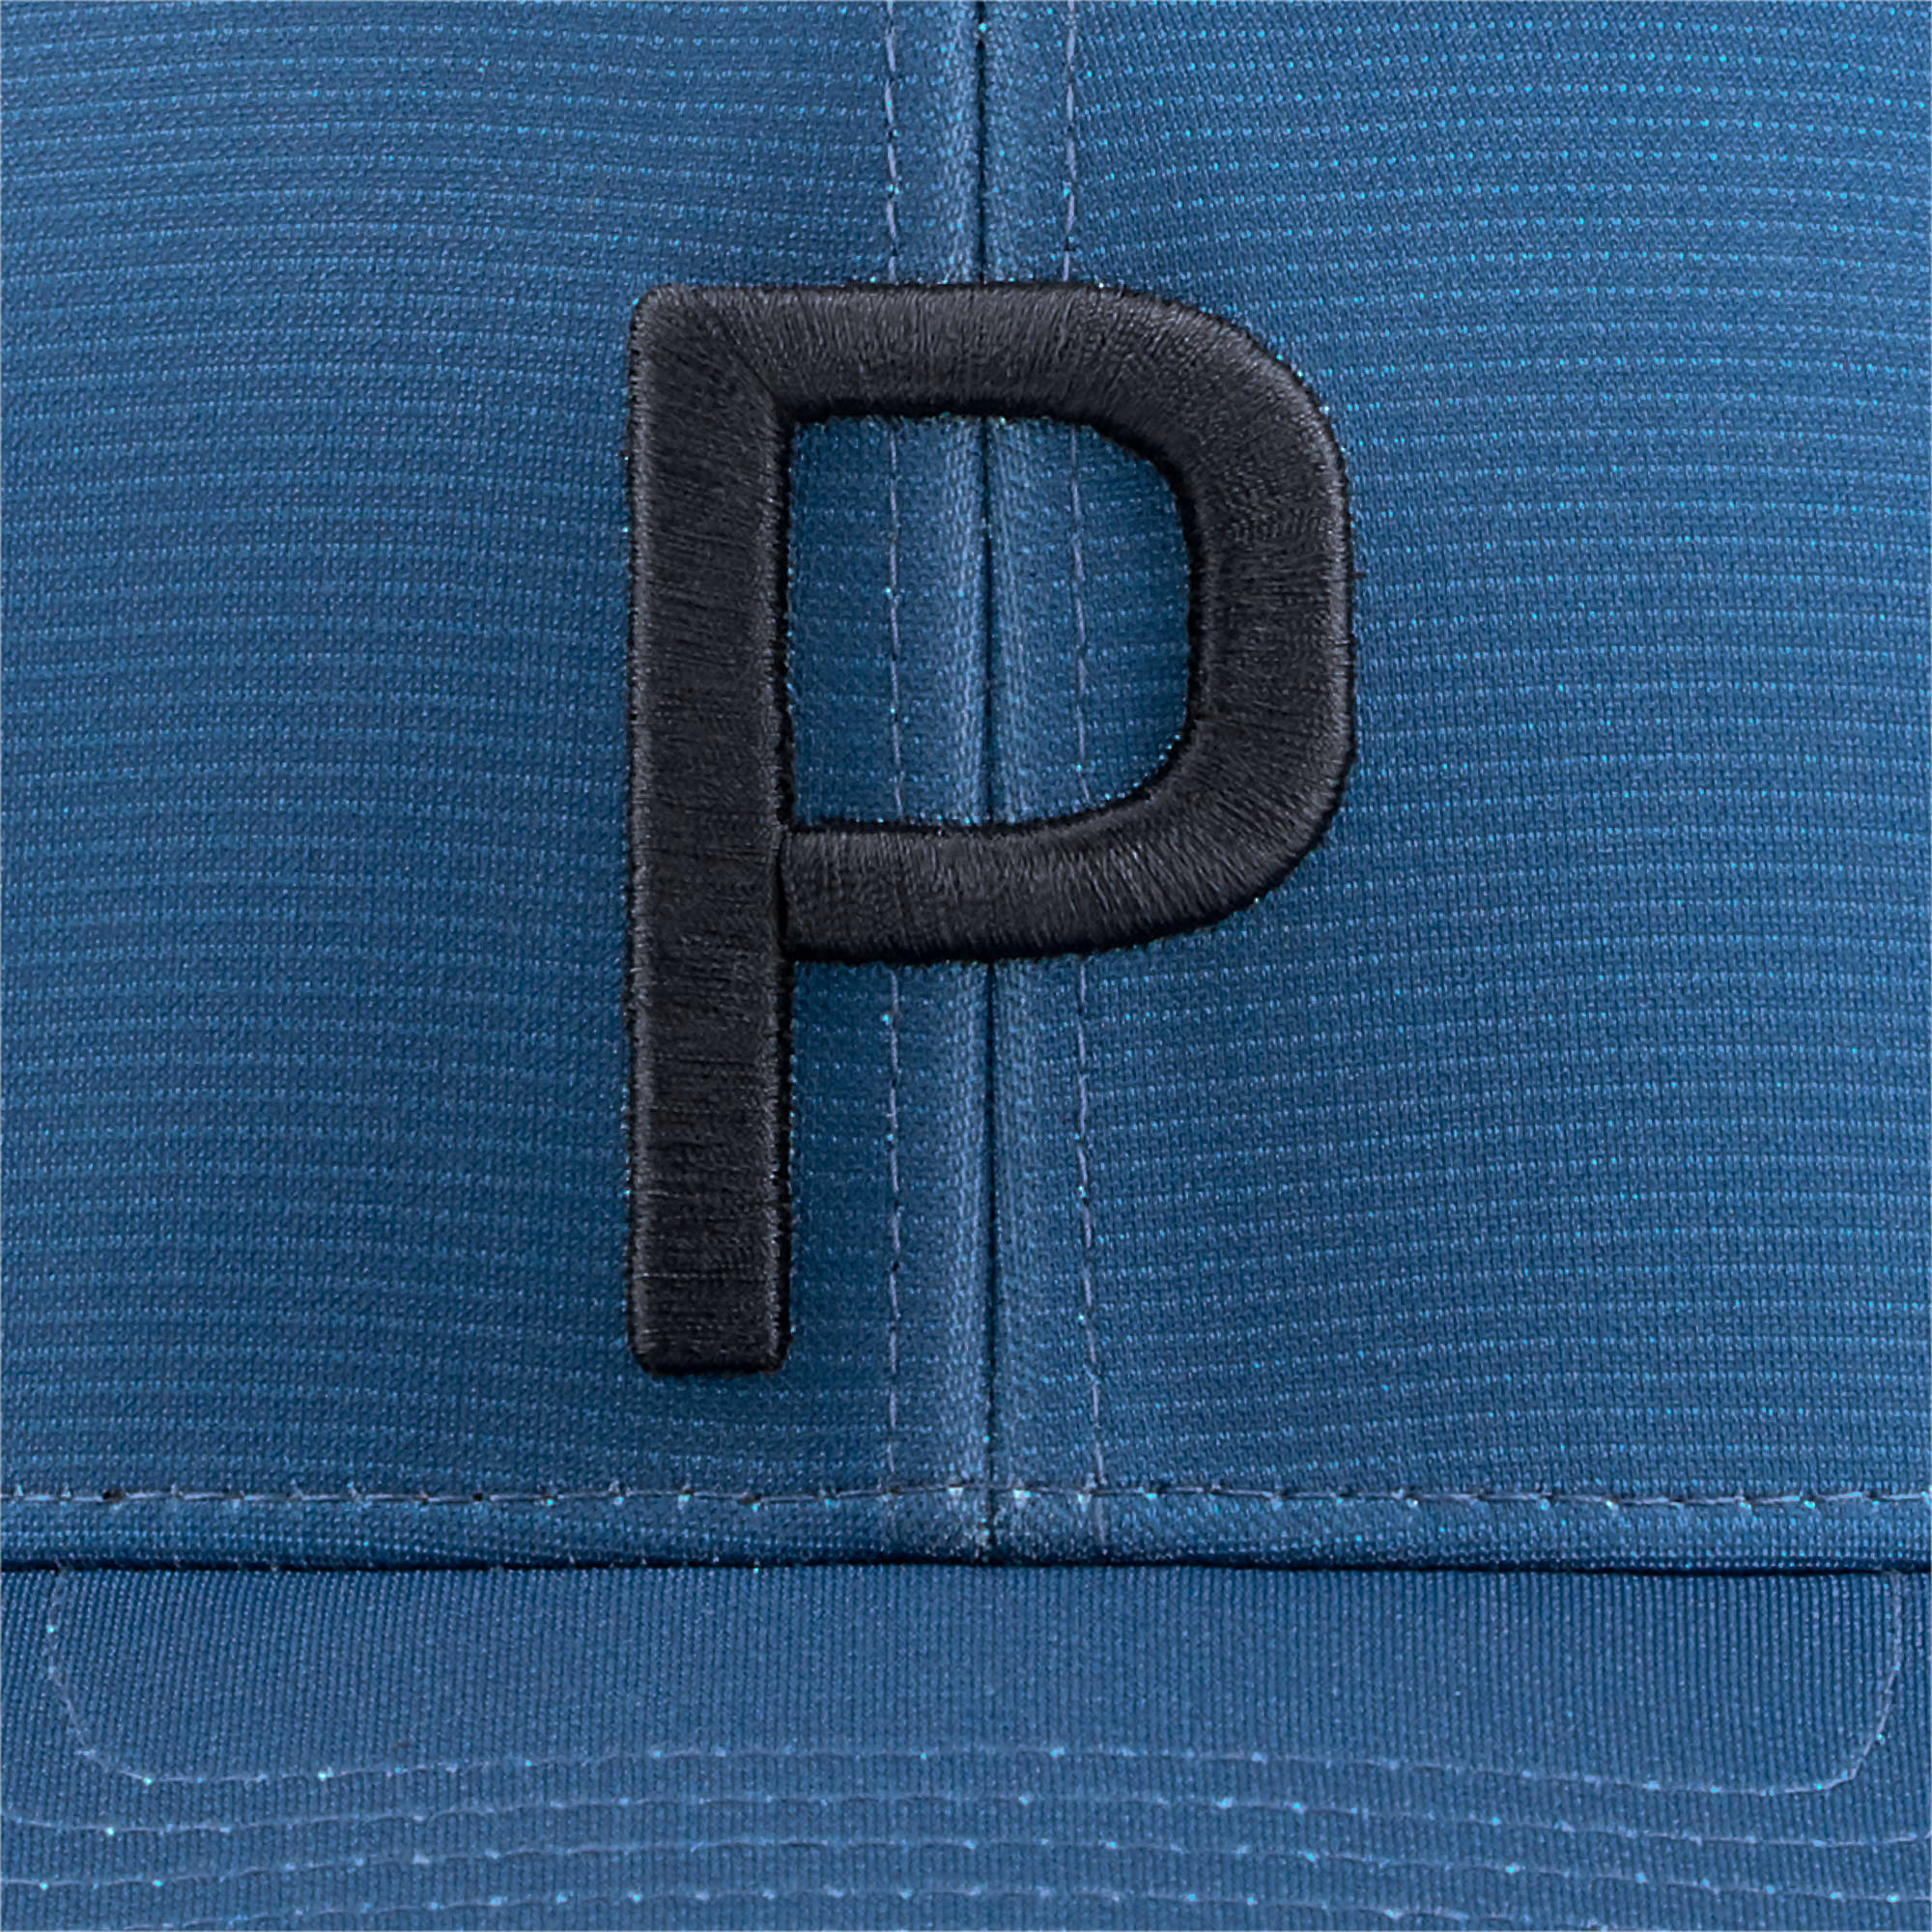 Men's PUMA P Golf Cap, Dark Blue, Accessories